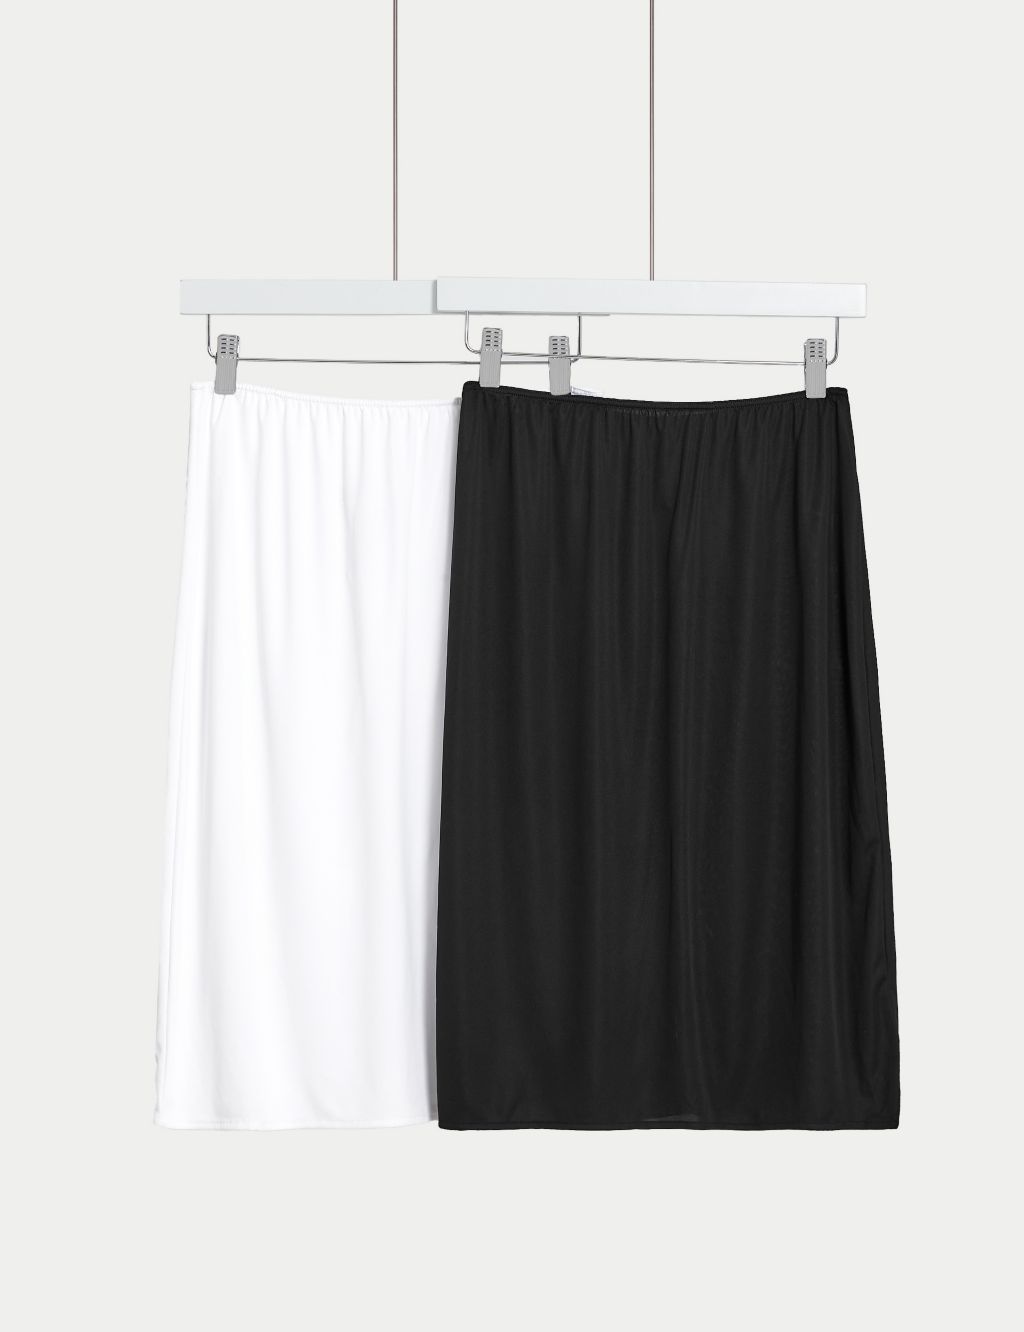 White Black Underskirt UK 6-18 Pure Cotton Half Slips 16 Petticoat WAIST  SLIP